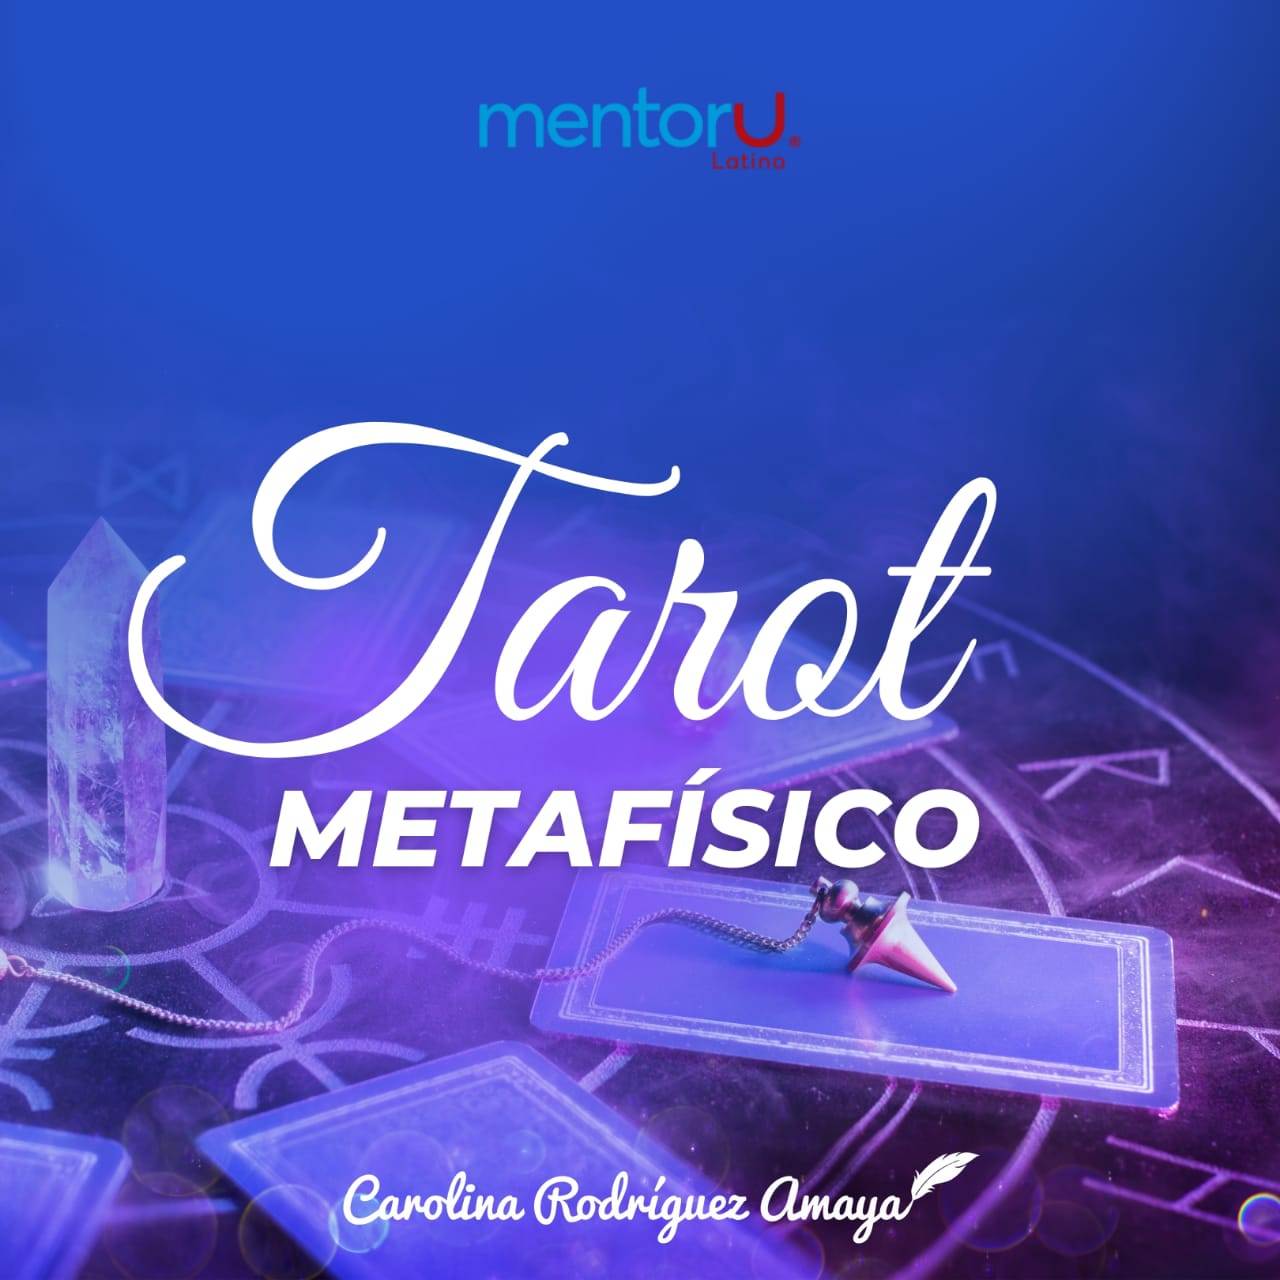 Tarot metafisico mentoru